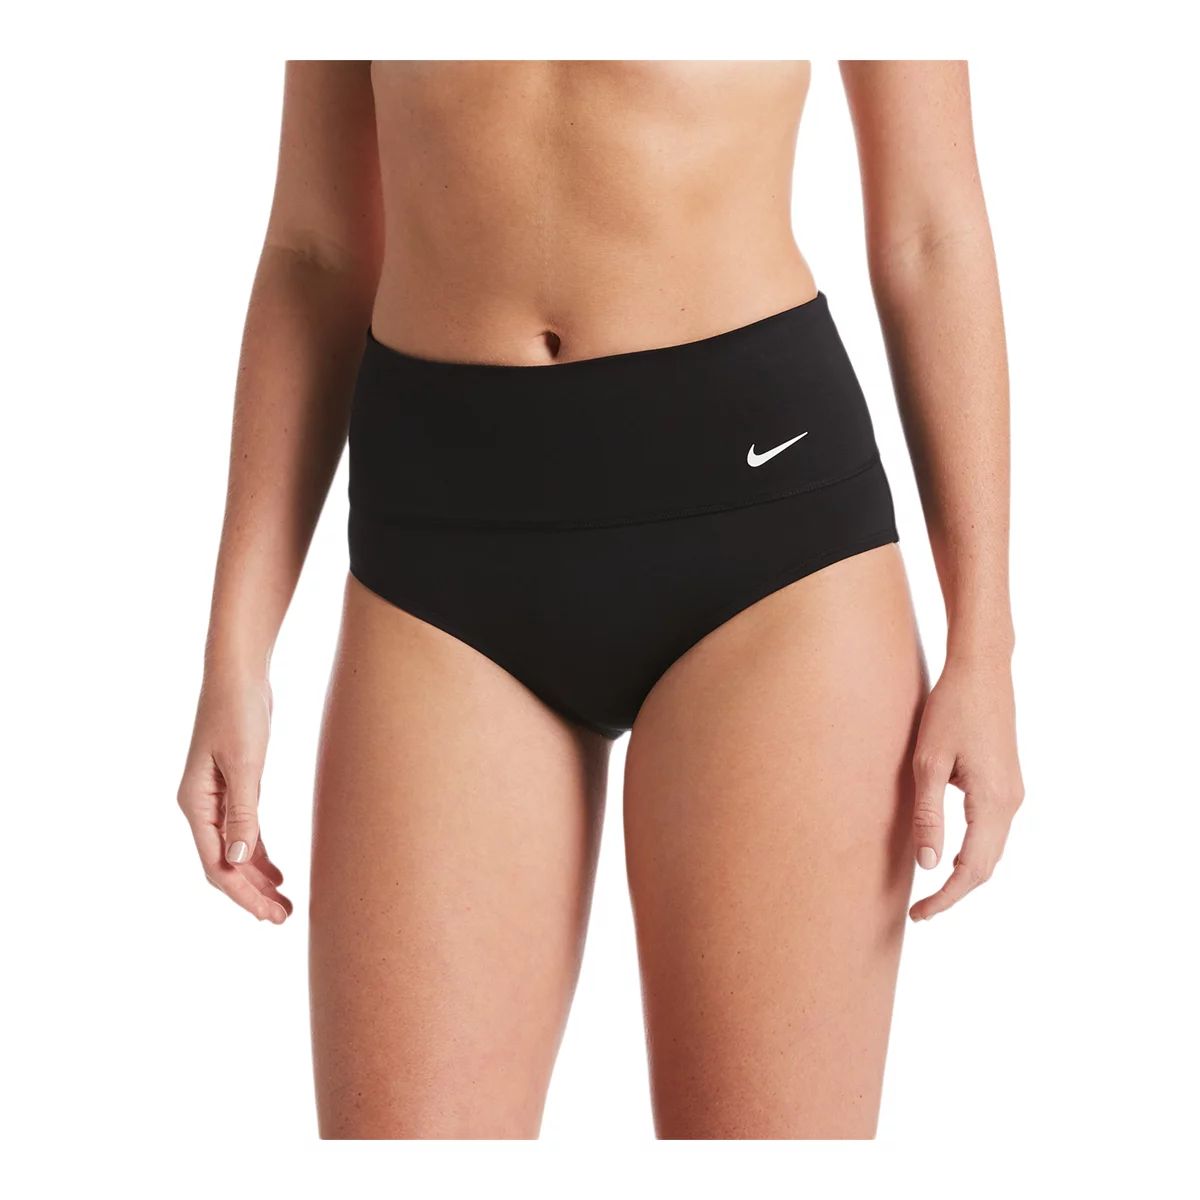 Nike Women's Essential High Waist Bikini Bottom